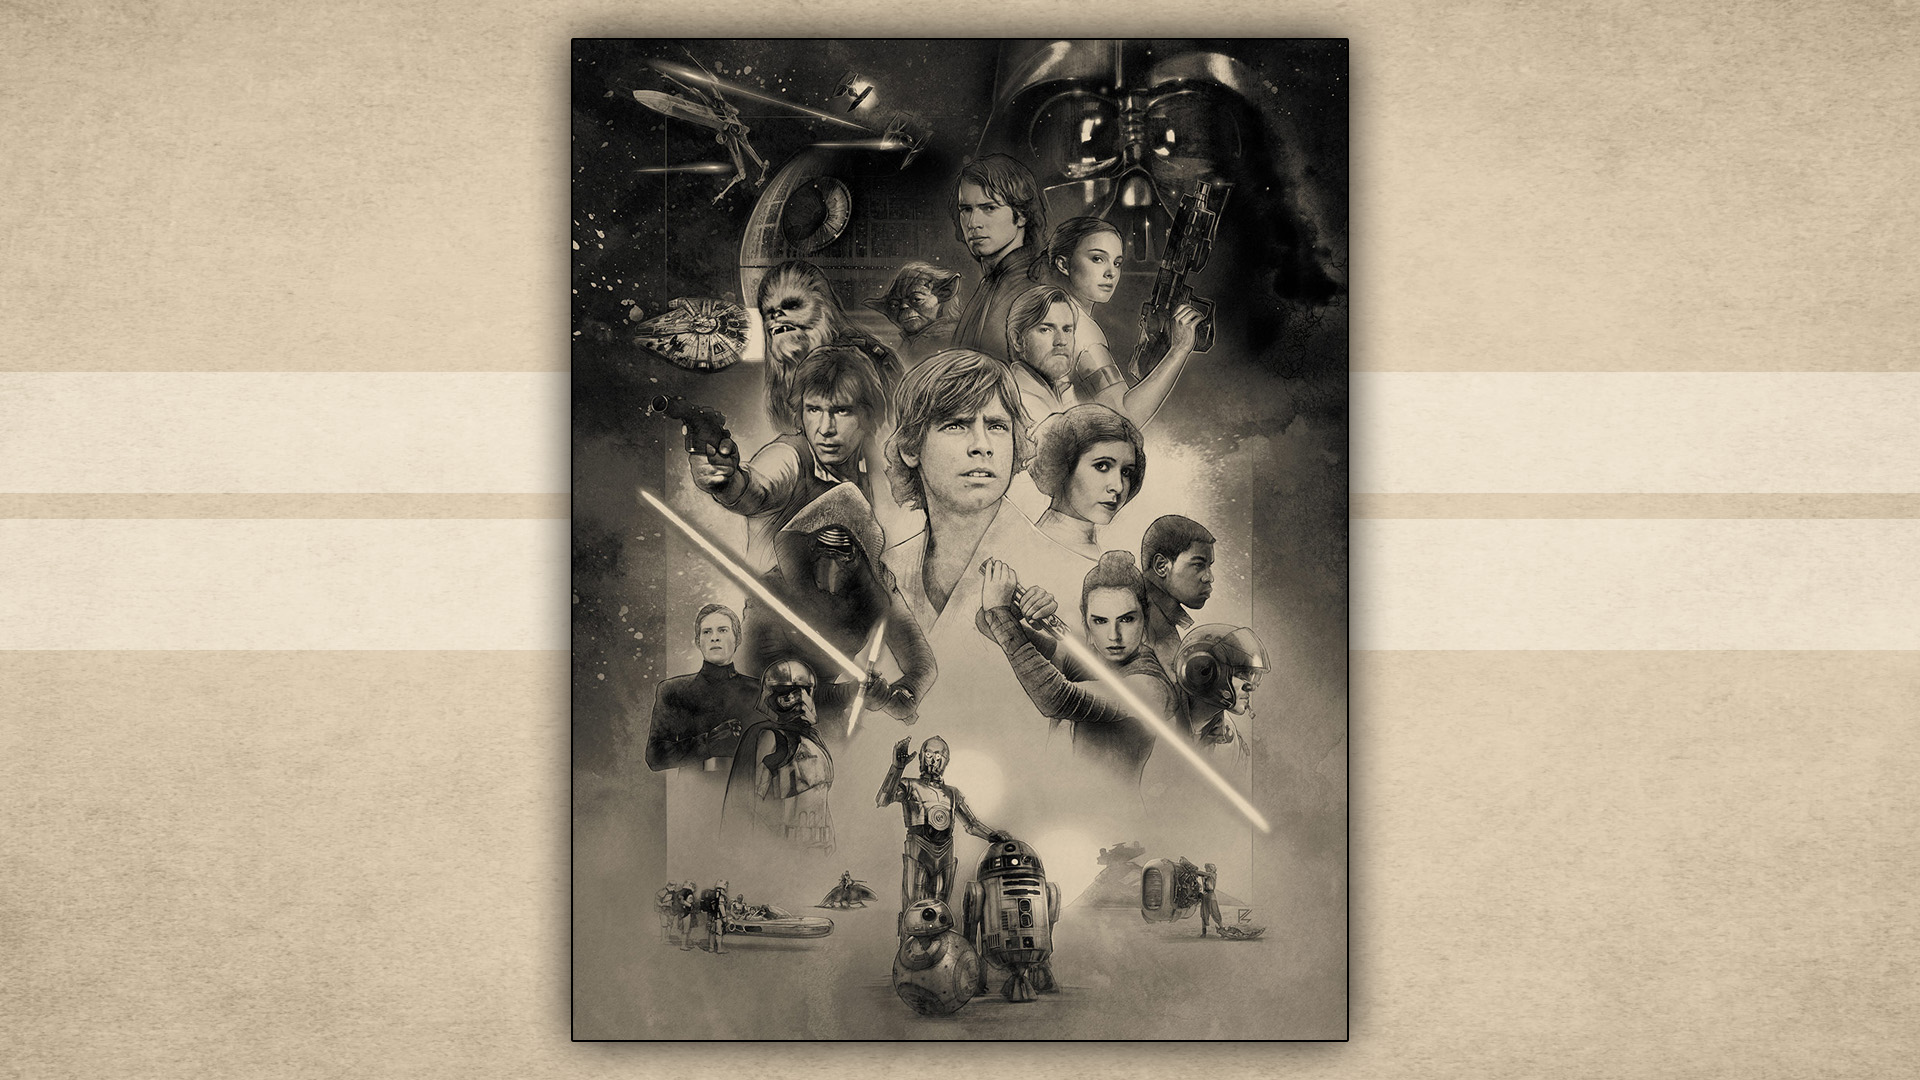 C 3po Chewbacca Han Solo Kylo Ren R2 D2 Rey Star Wars Star Wars Star Wars Celebration 1920x1080